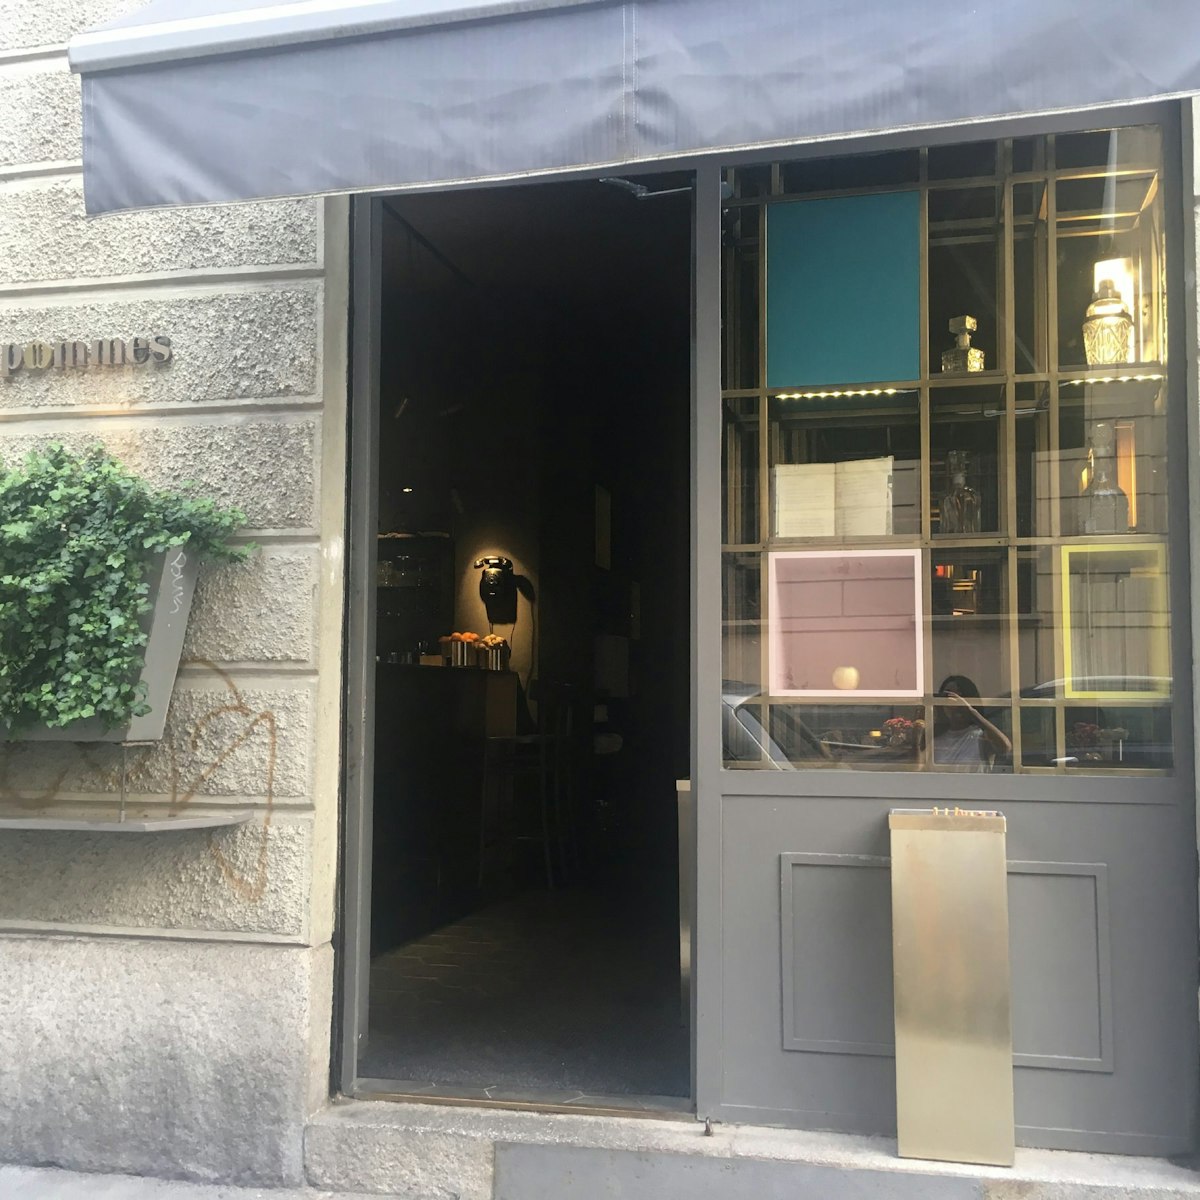 The entrance to Les Pommes restaurant